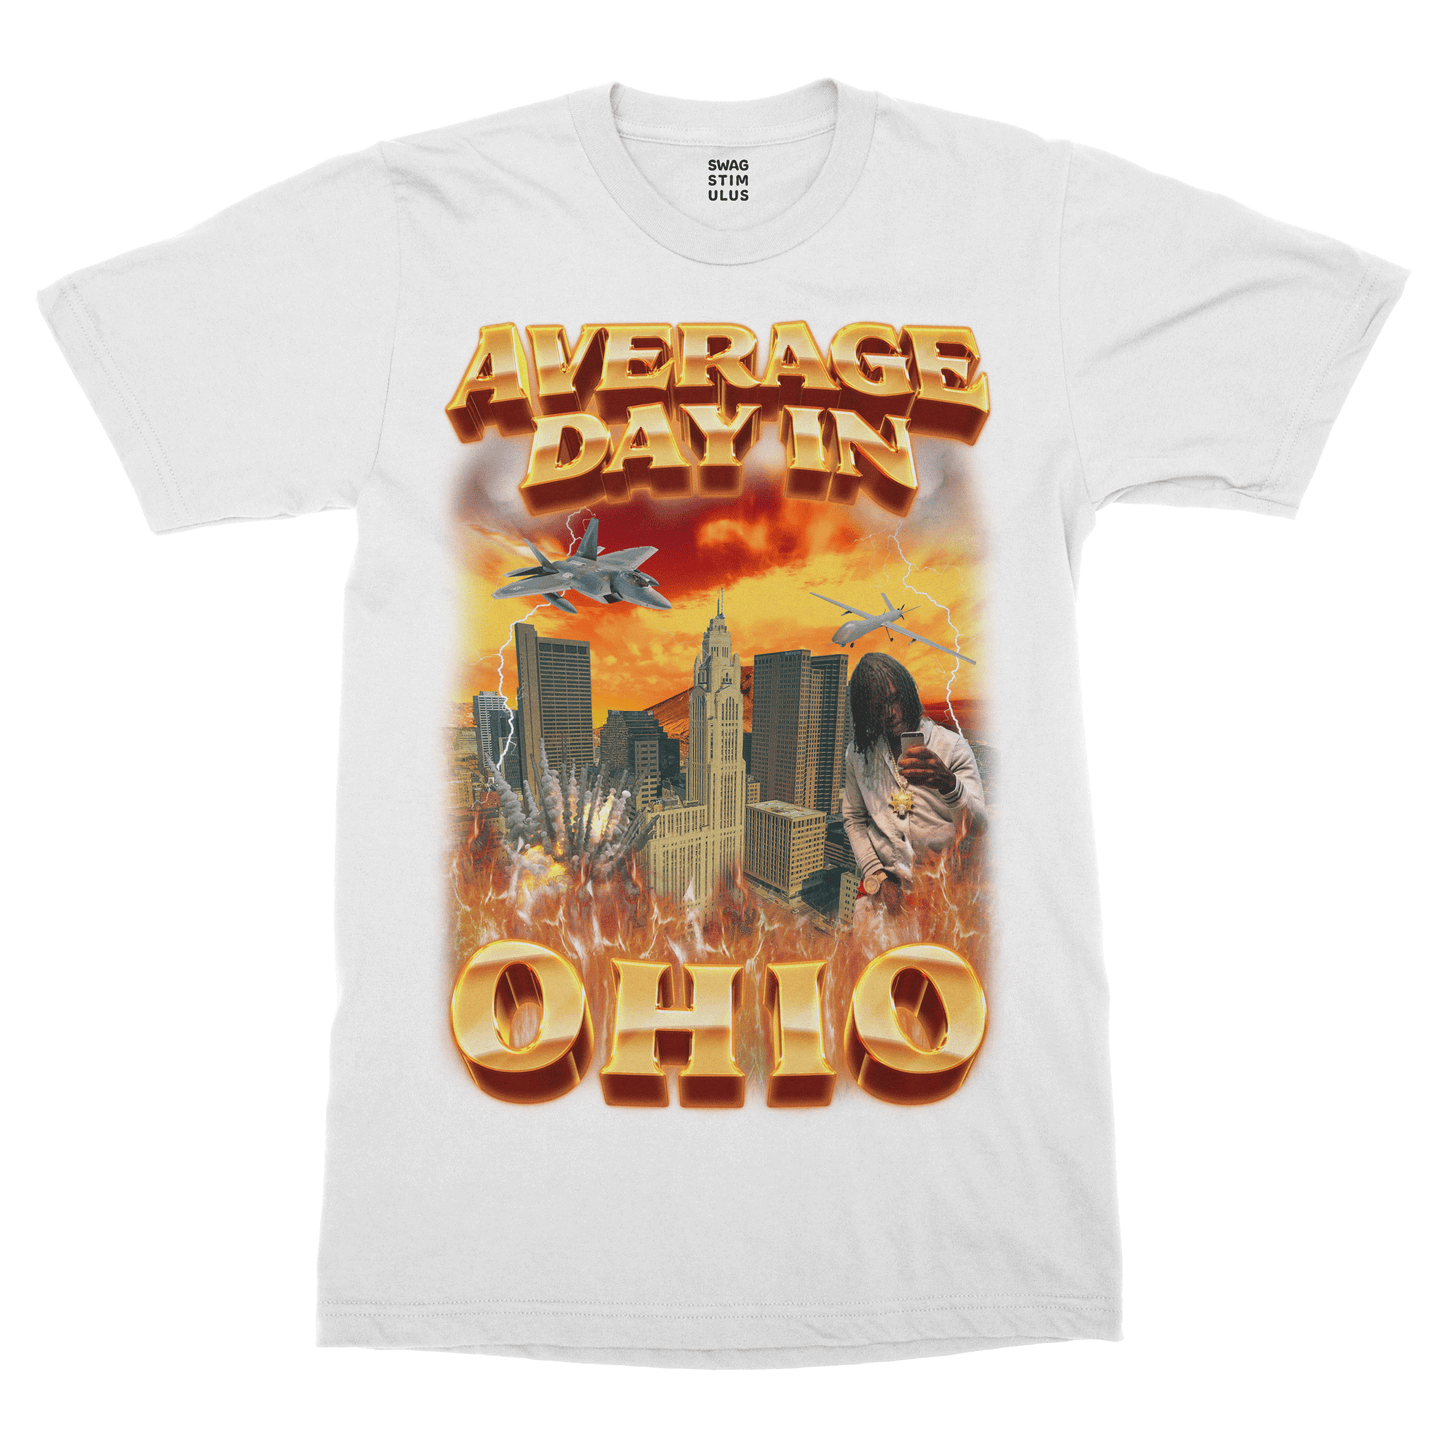 Average Day in Ohio T-Shirt